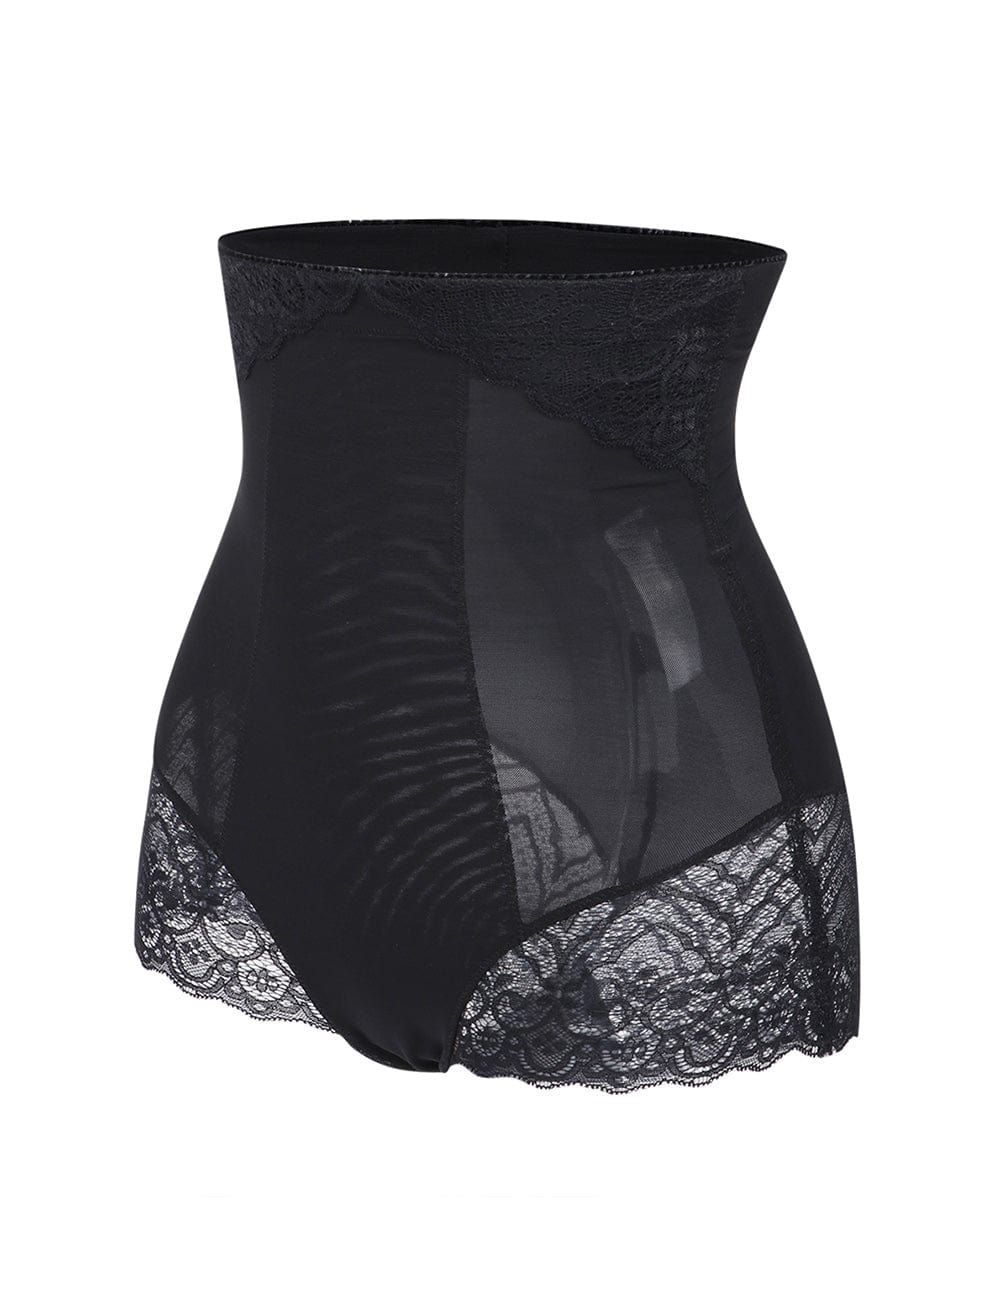 Wholesale Plus Size High Waist Panty Girdle Lace Hem Breathable